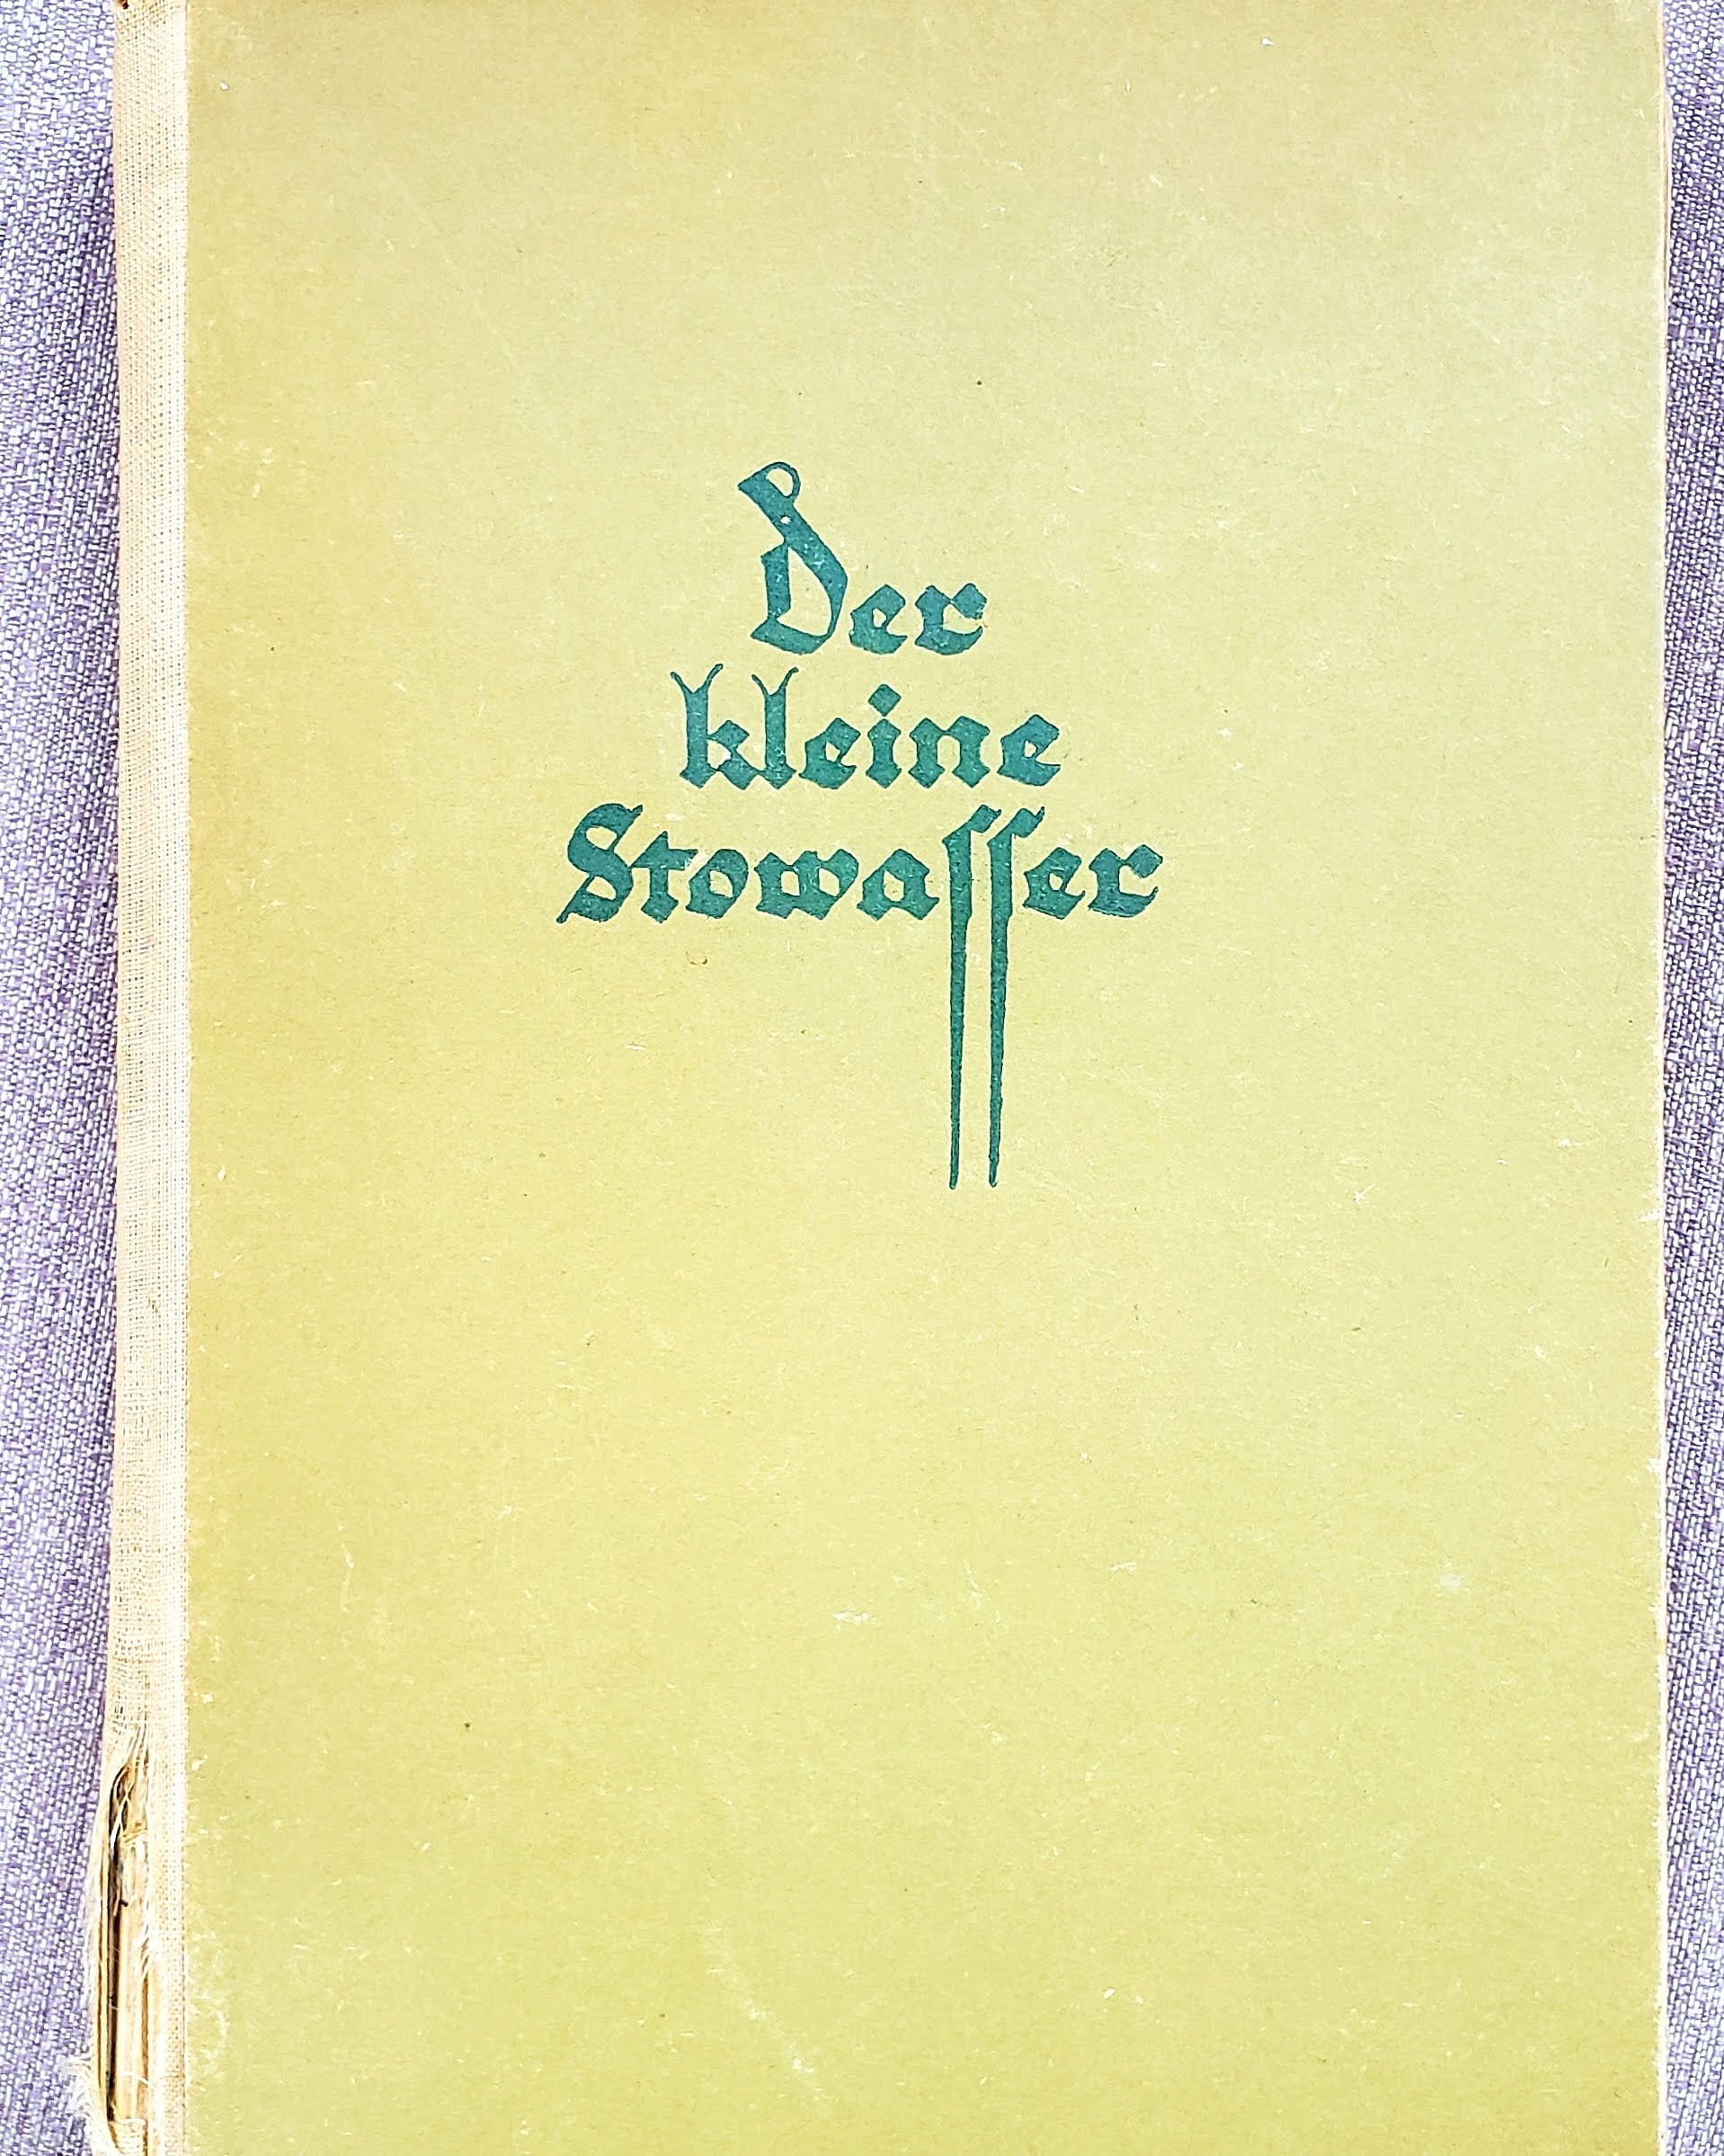 yellowed title page of Latin-German Stowasser dictionary